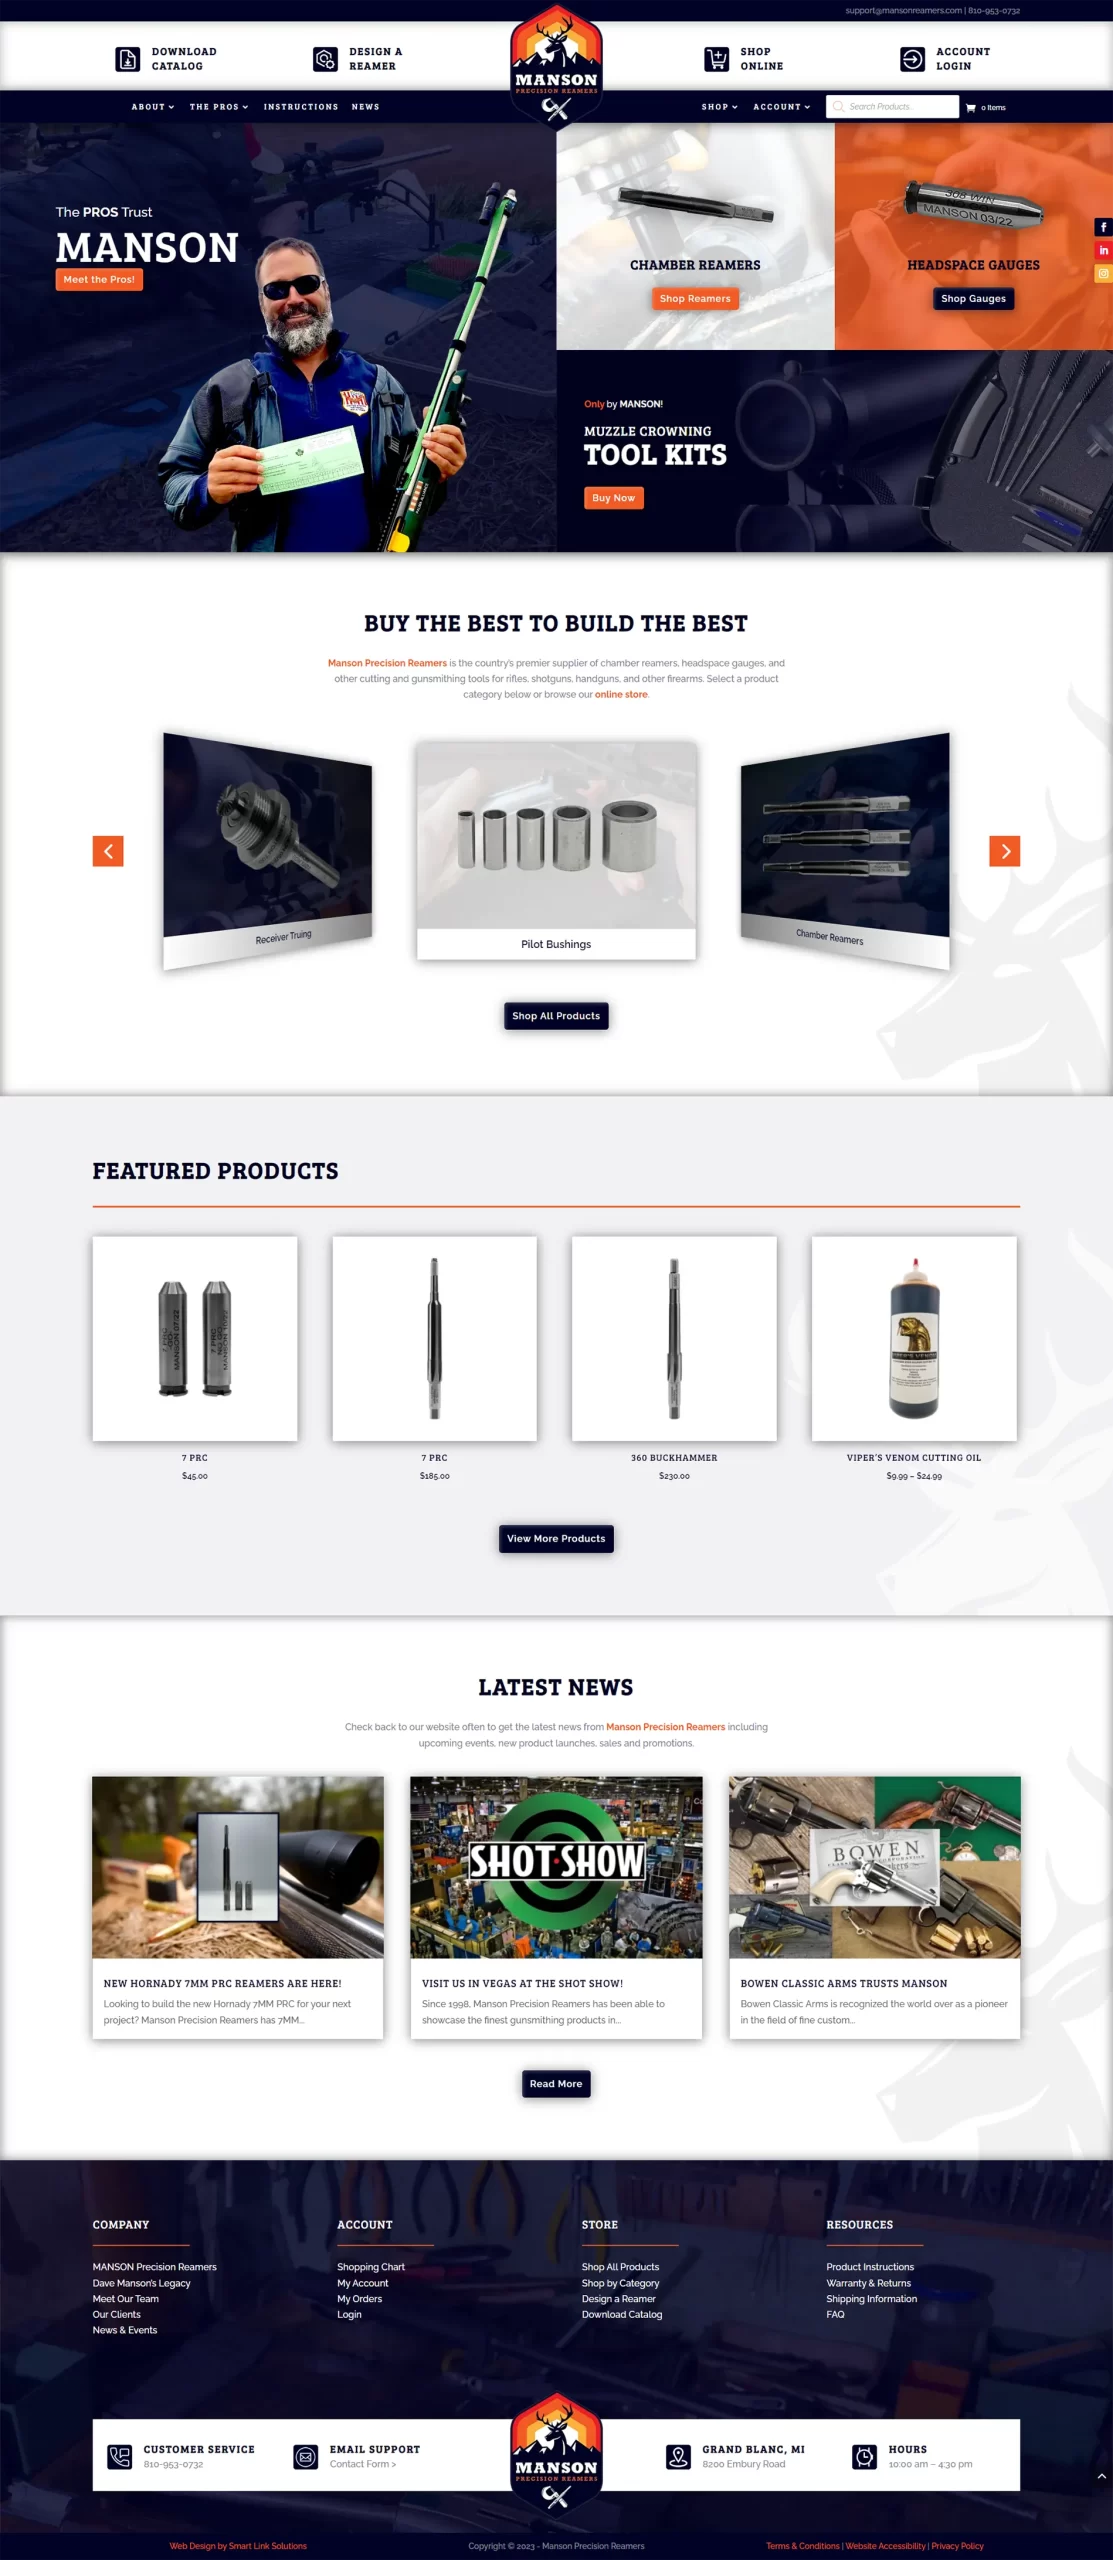 Manson Reamers Homepage Design E-Commerce Site Inspiration